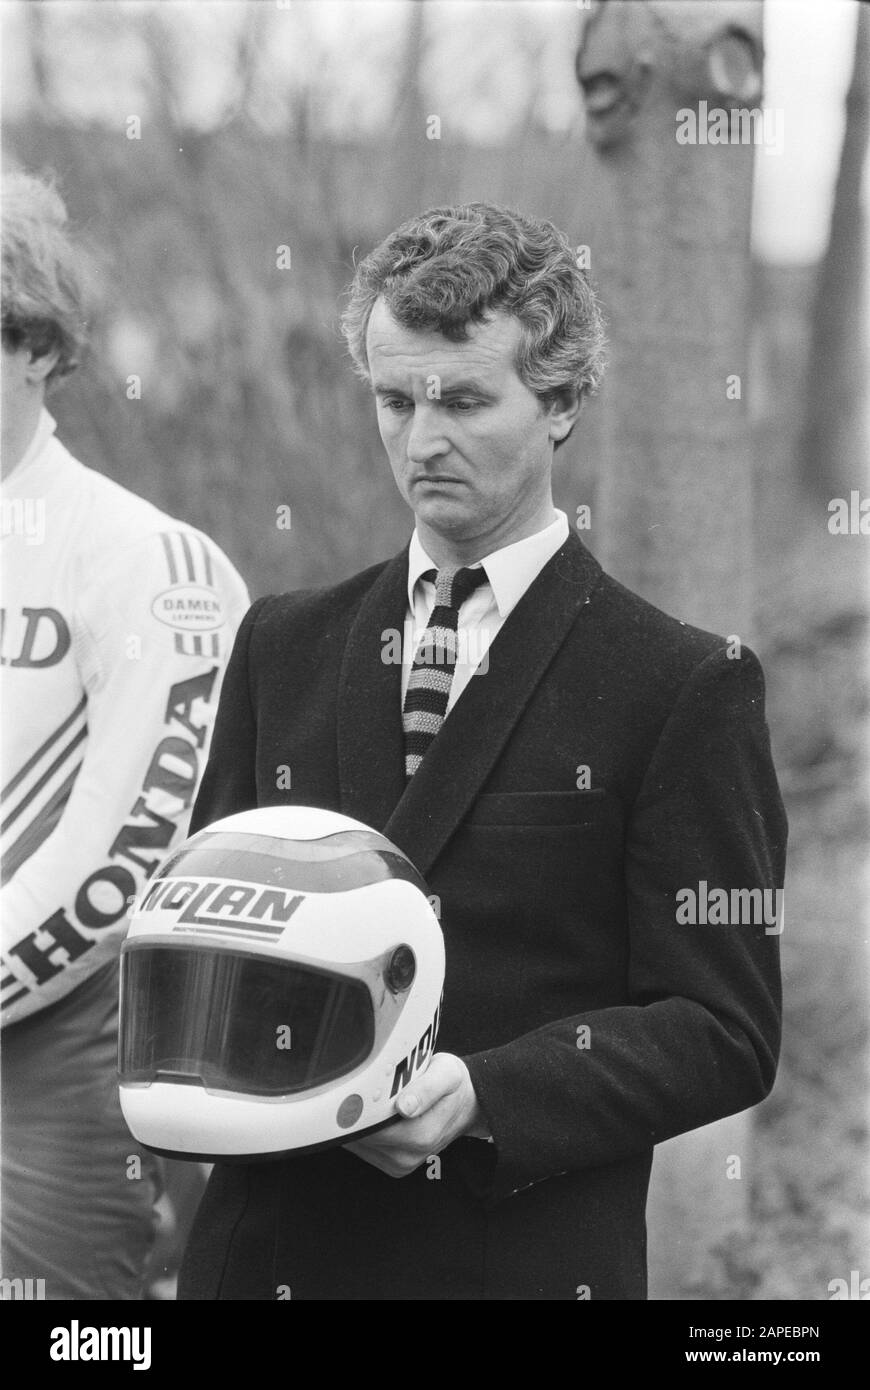 Jack Middelburg (1952 - 1984) was a Dutch professional Grand Prix